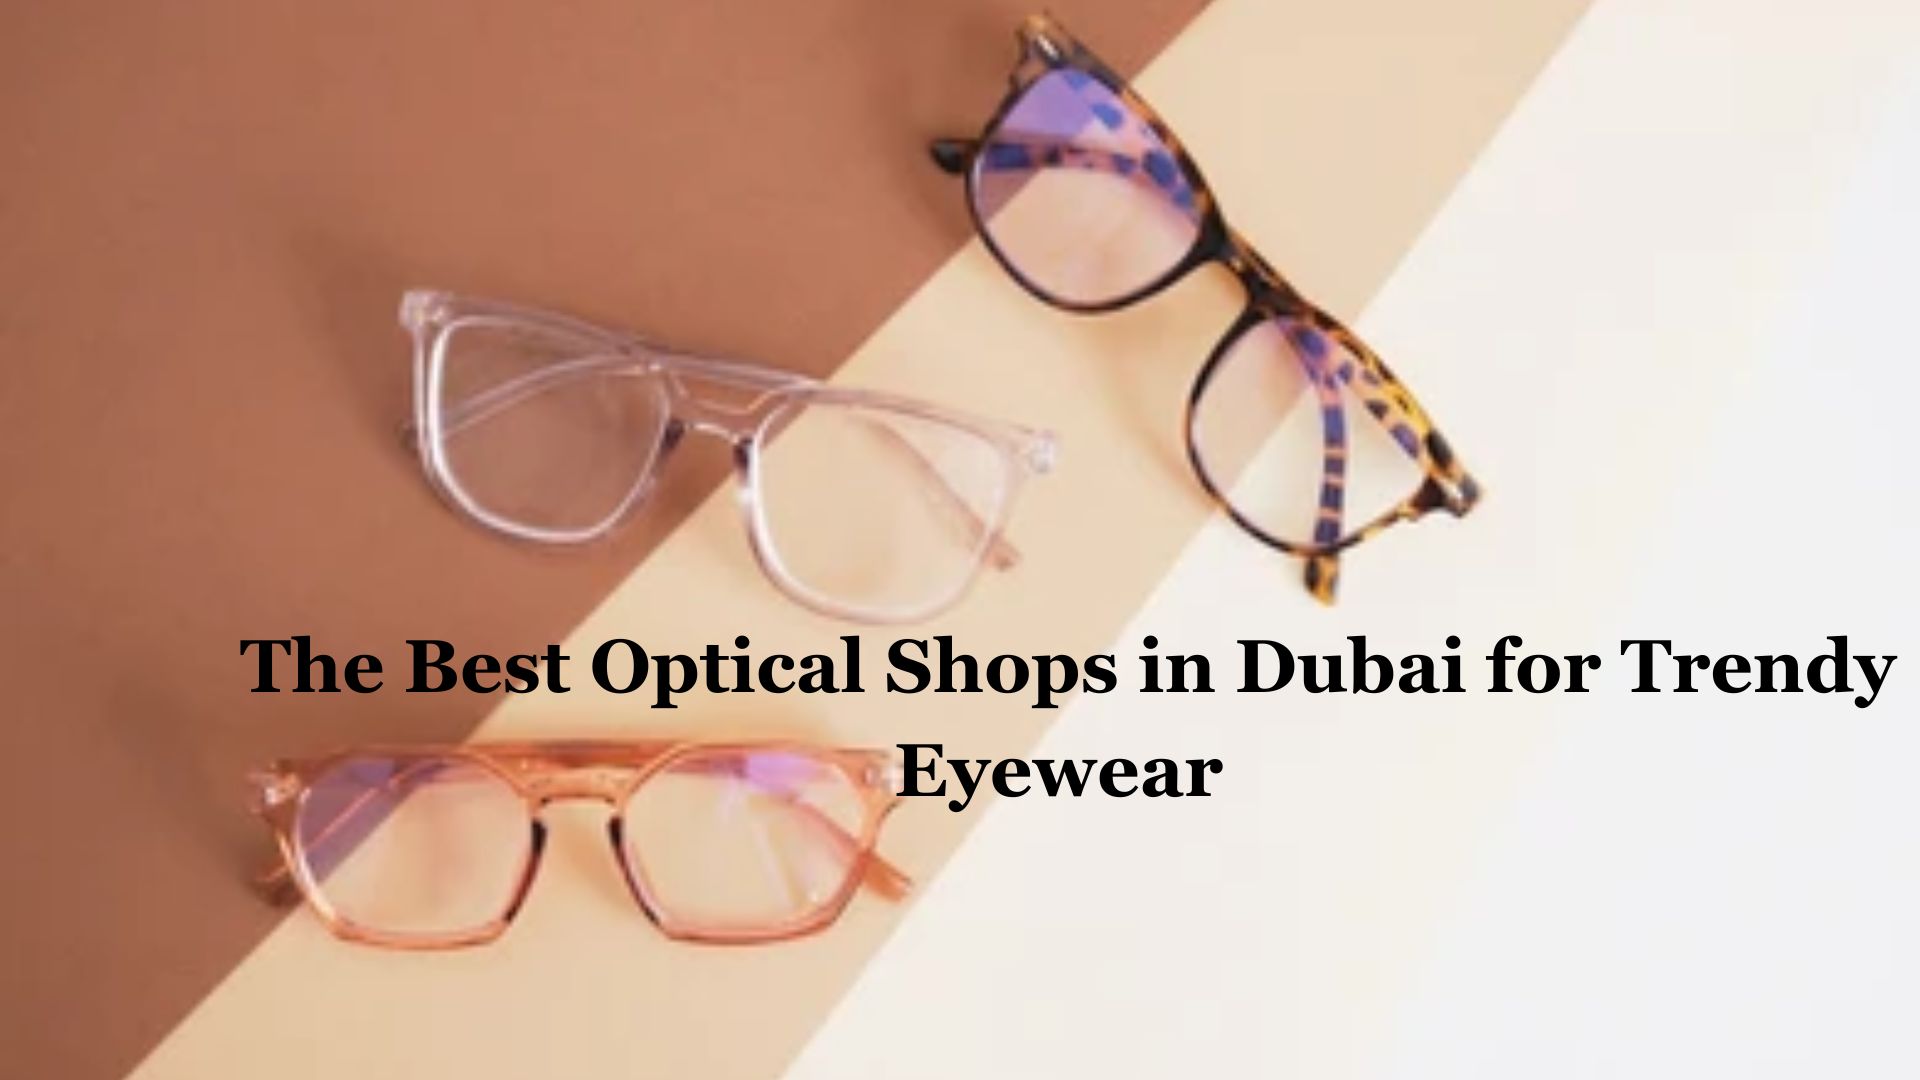 The Best Optical Shops in Dubai for Trendy Eyewear